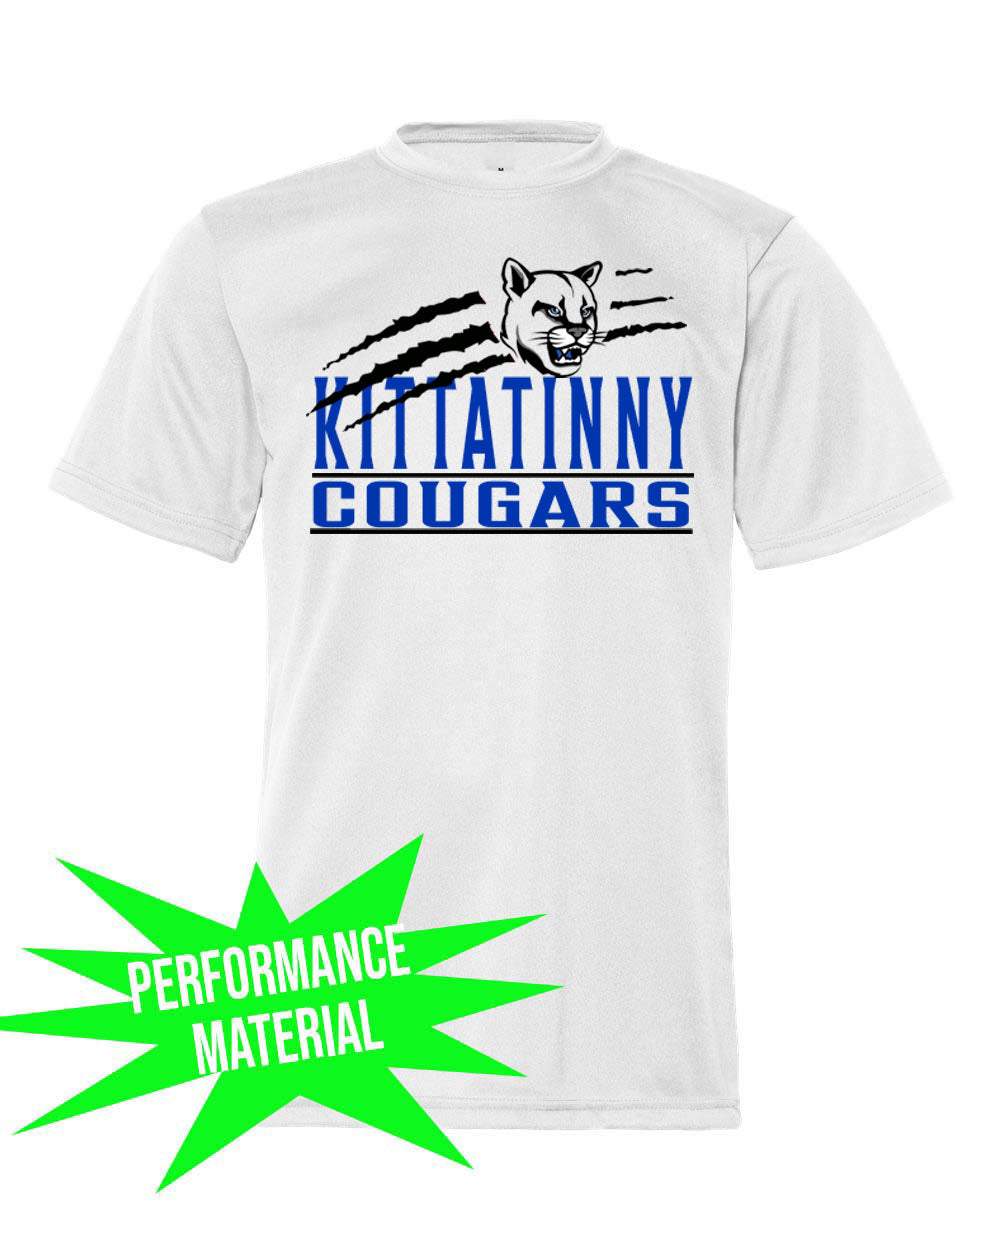 KRHS Performance Material design 16 T-Shirt